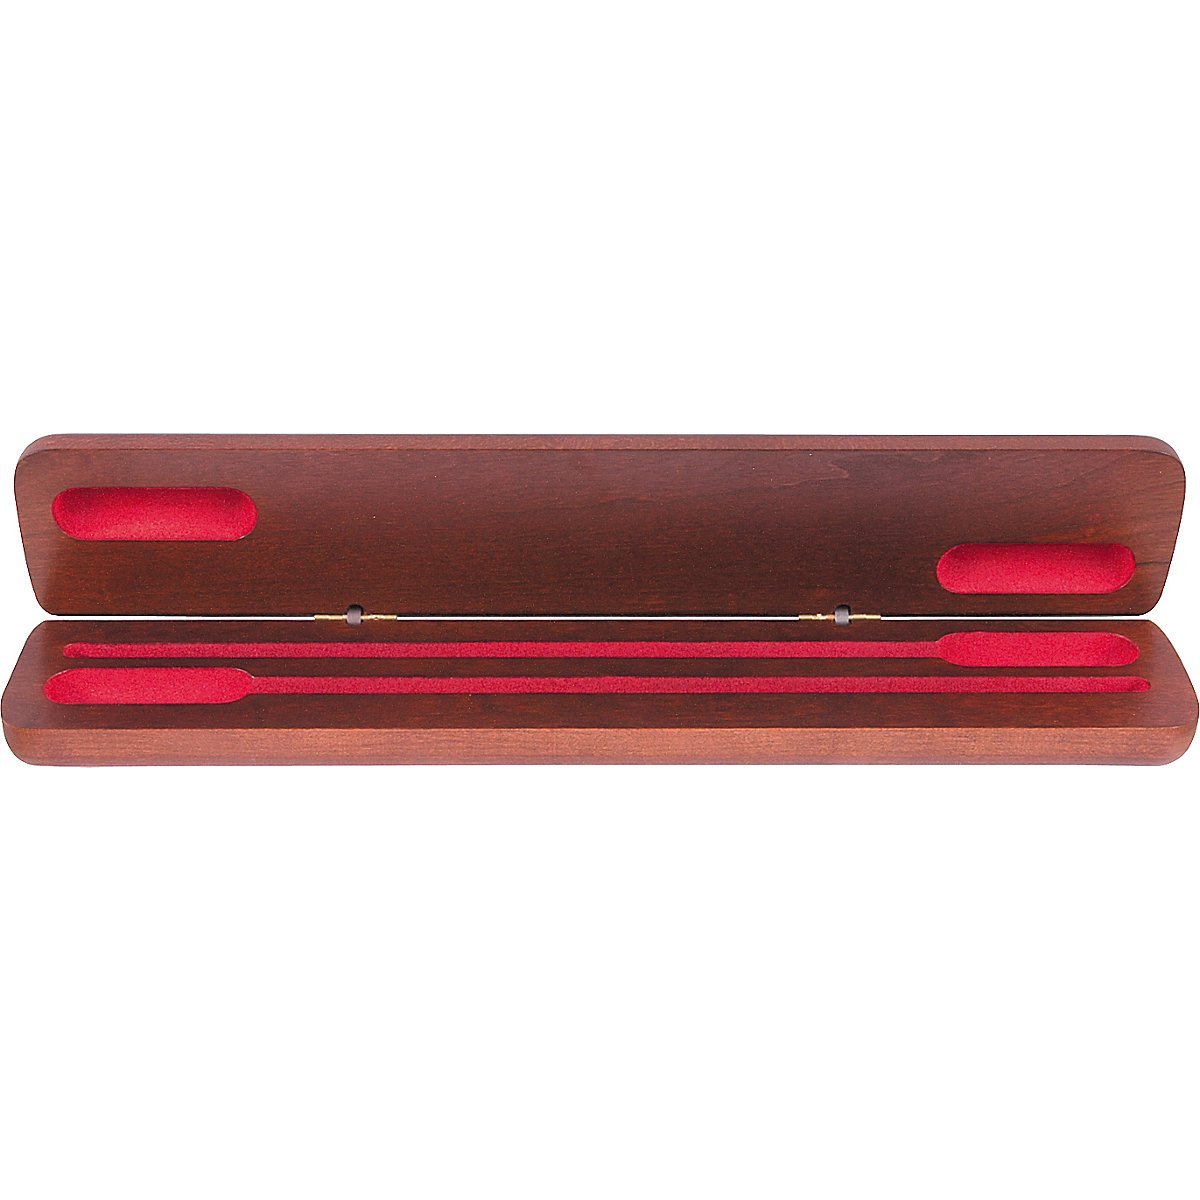 Mollard P69 Cherry Red Baton Case (P69C)